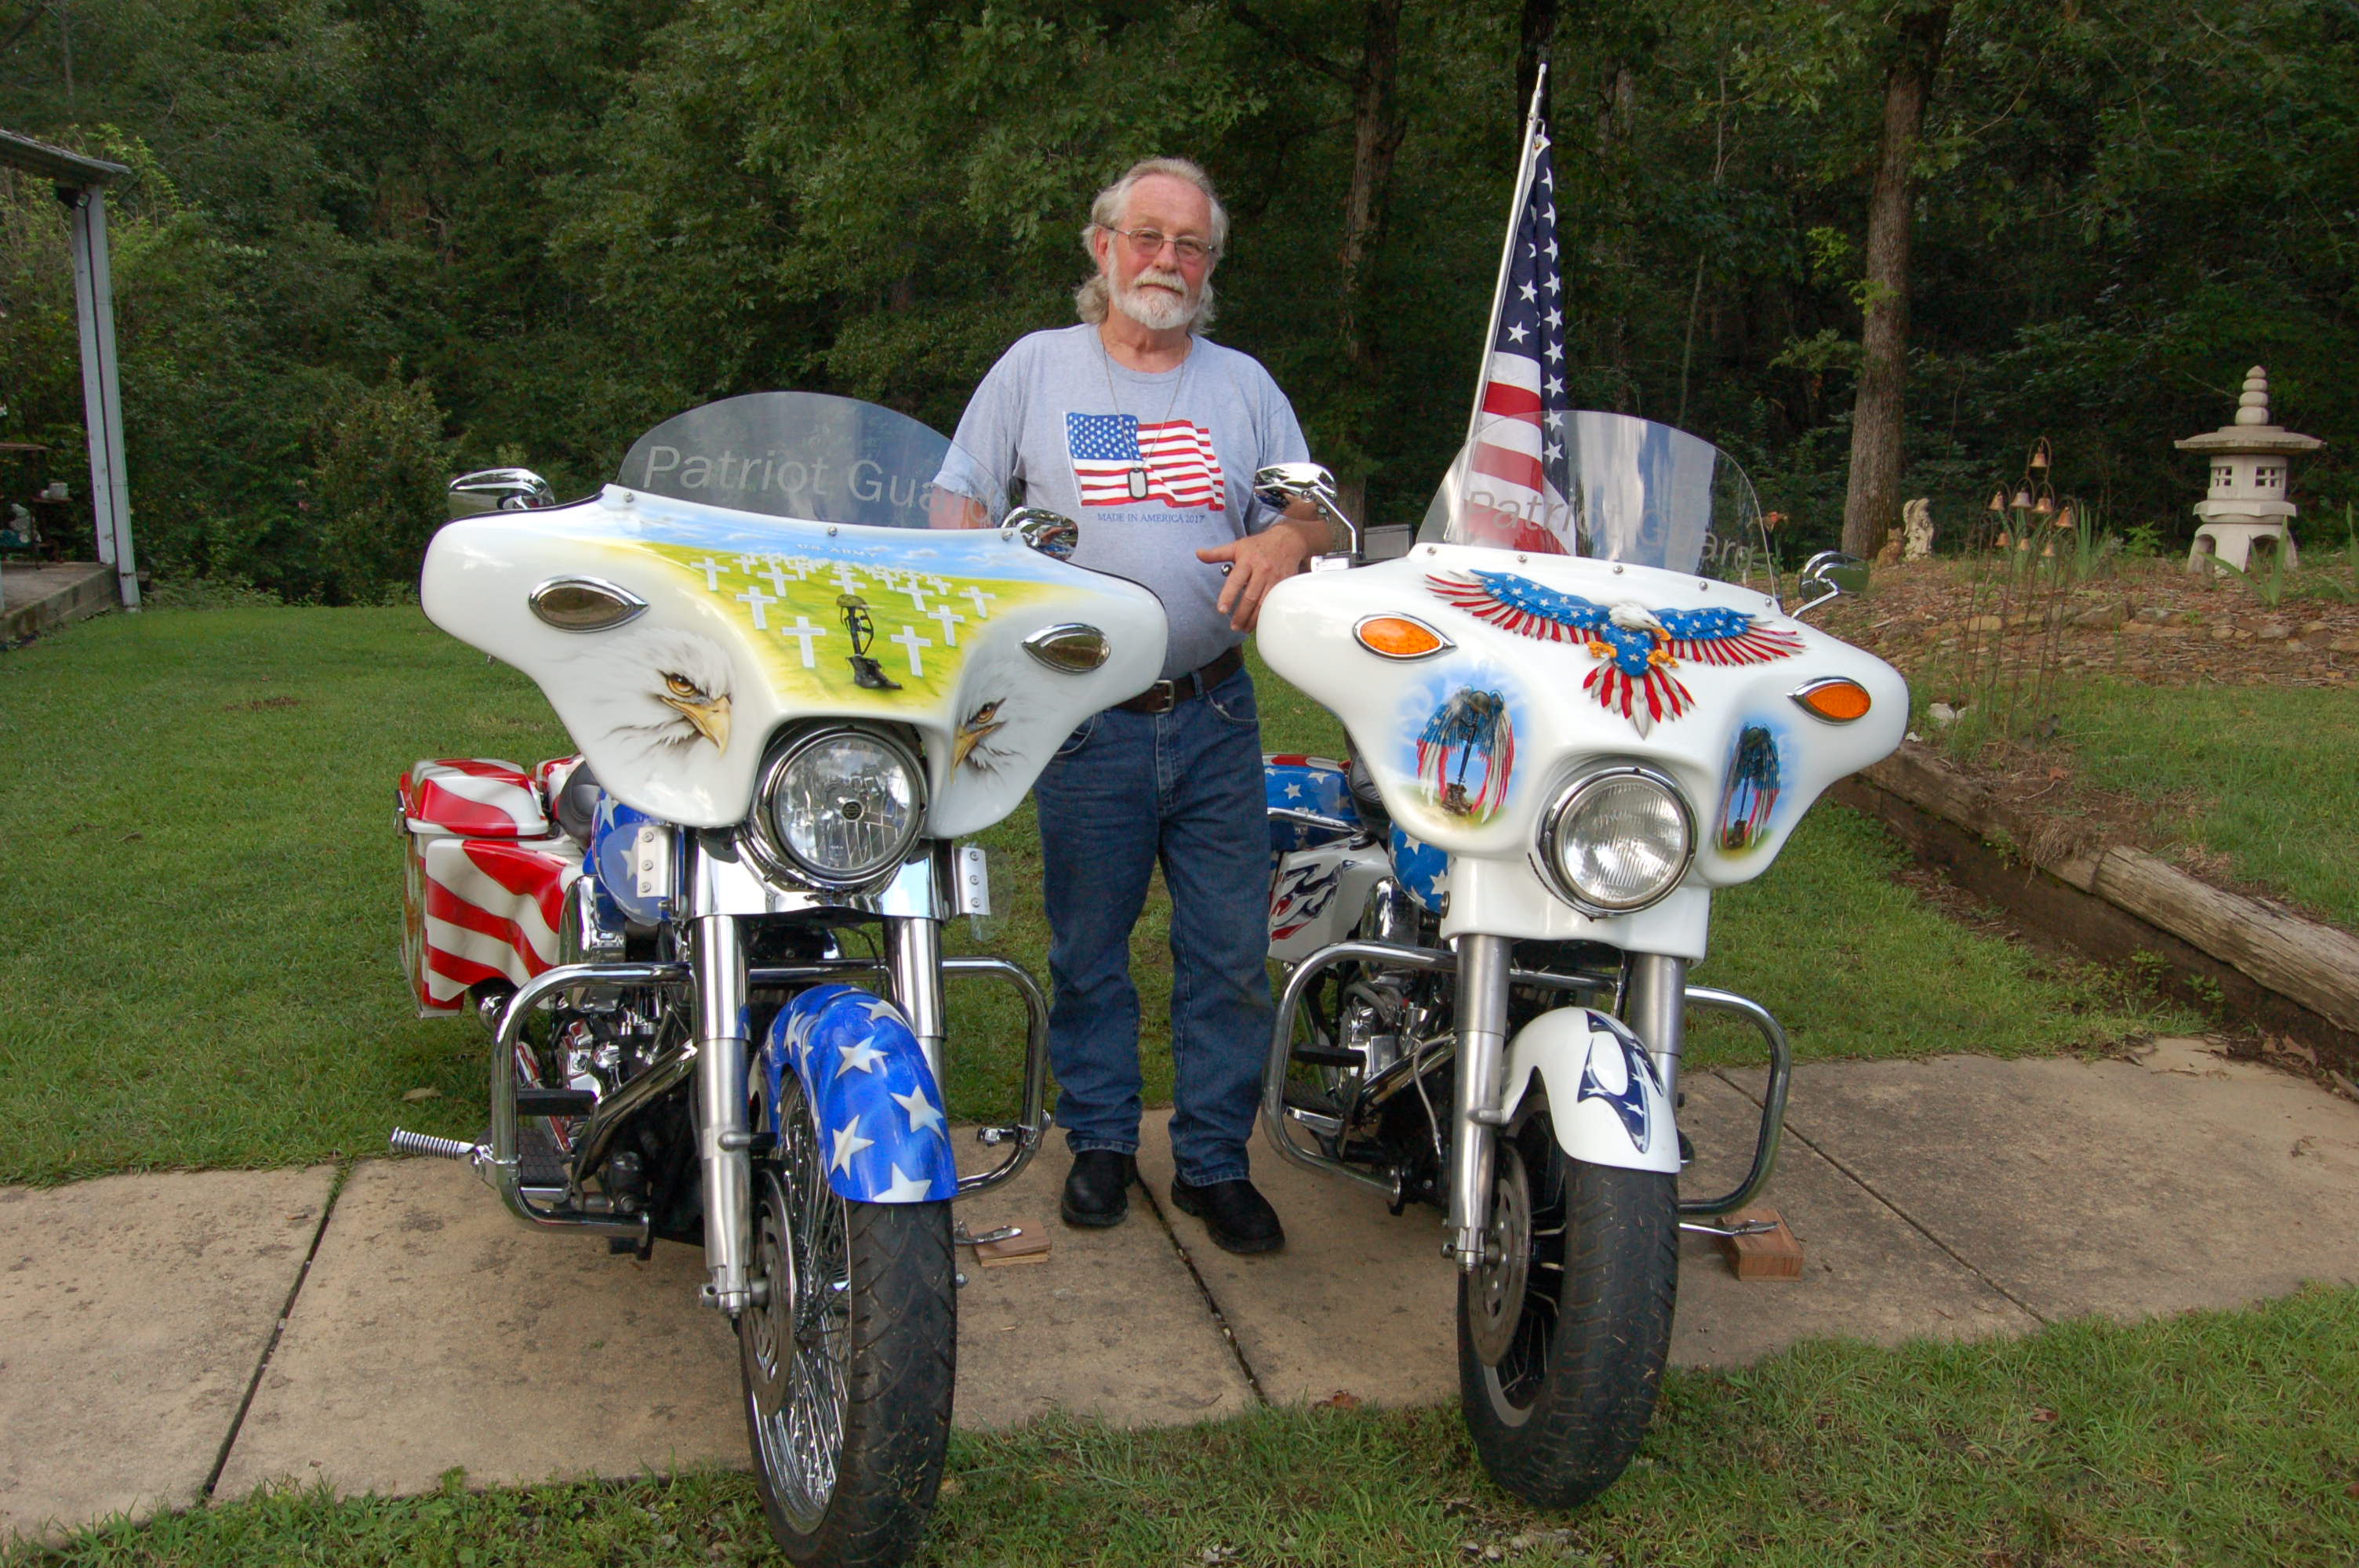 American Ride: Project Patriot Bikes displays true colors